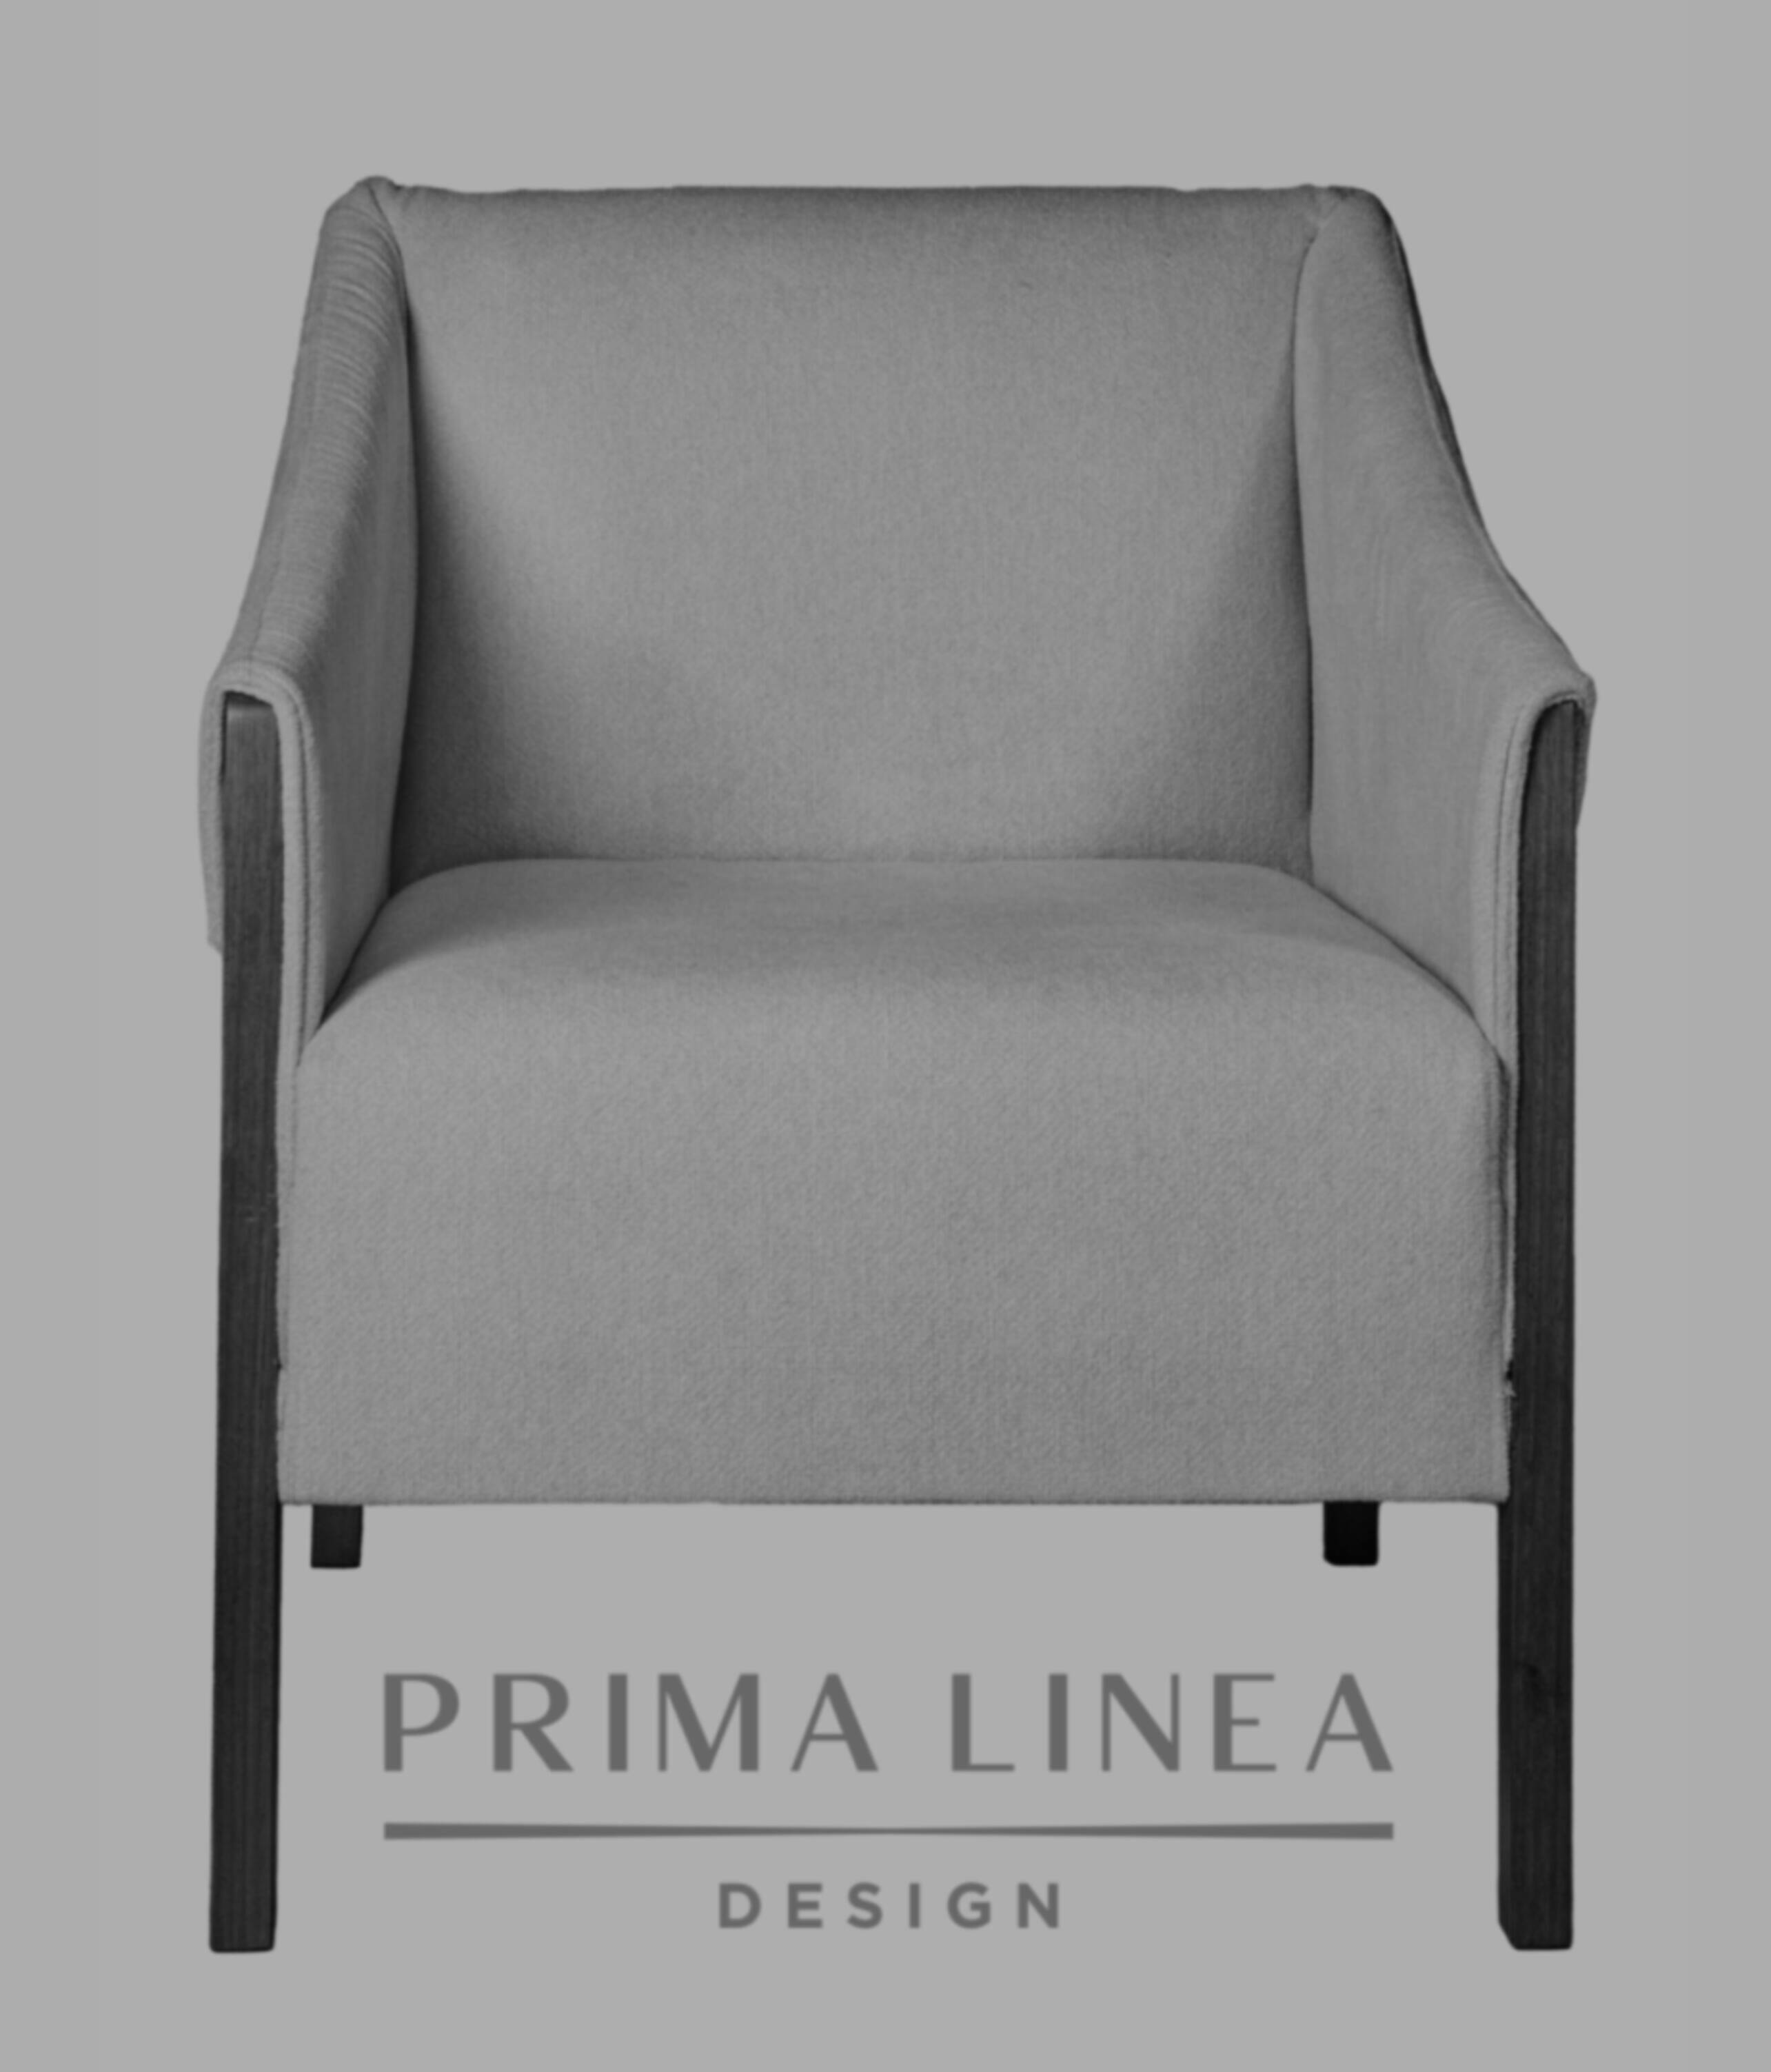 Studio Prima Linea